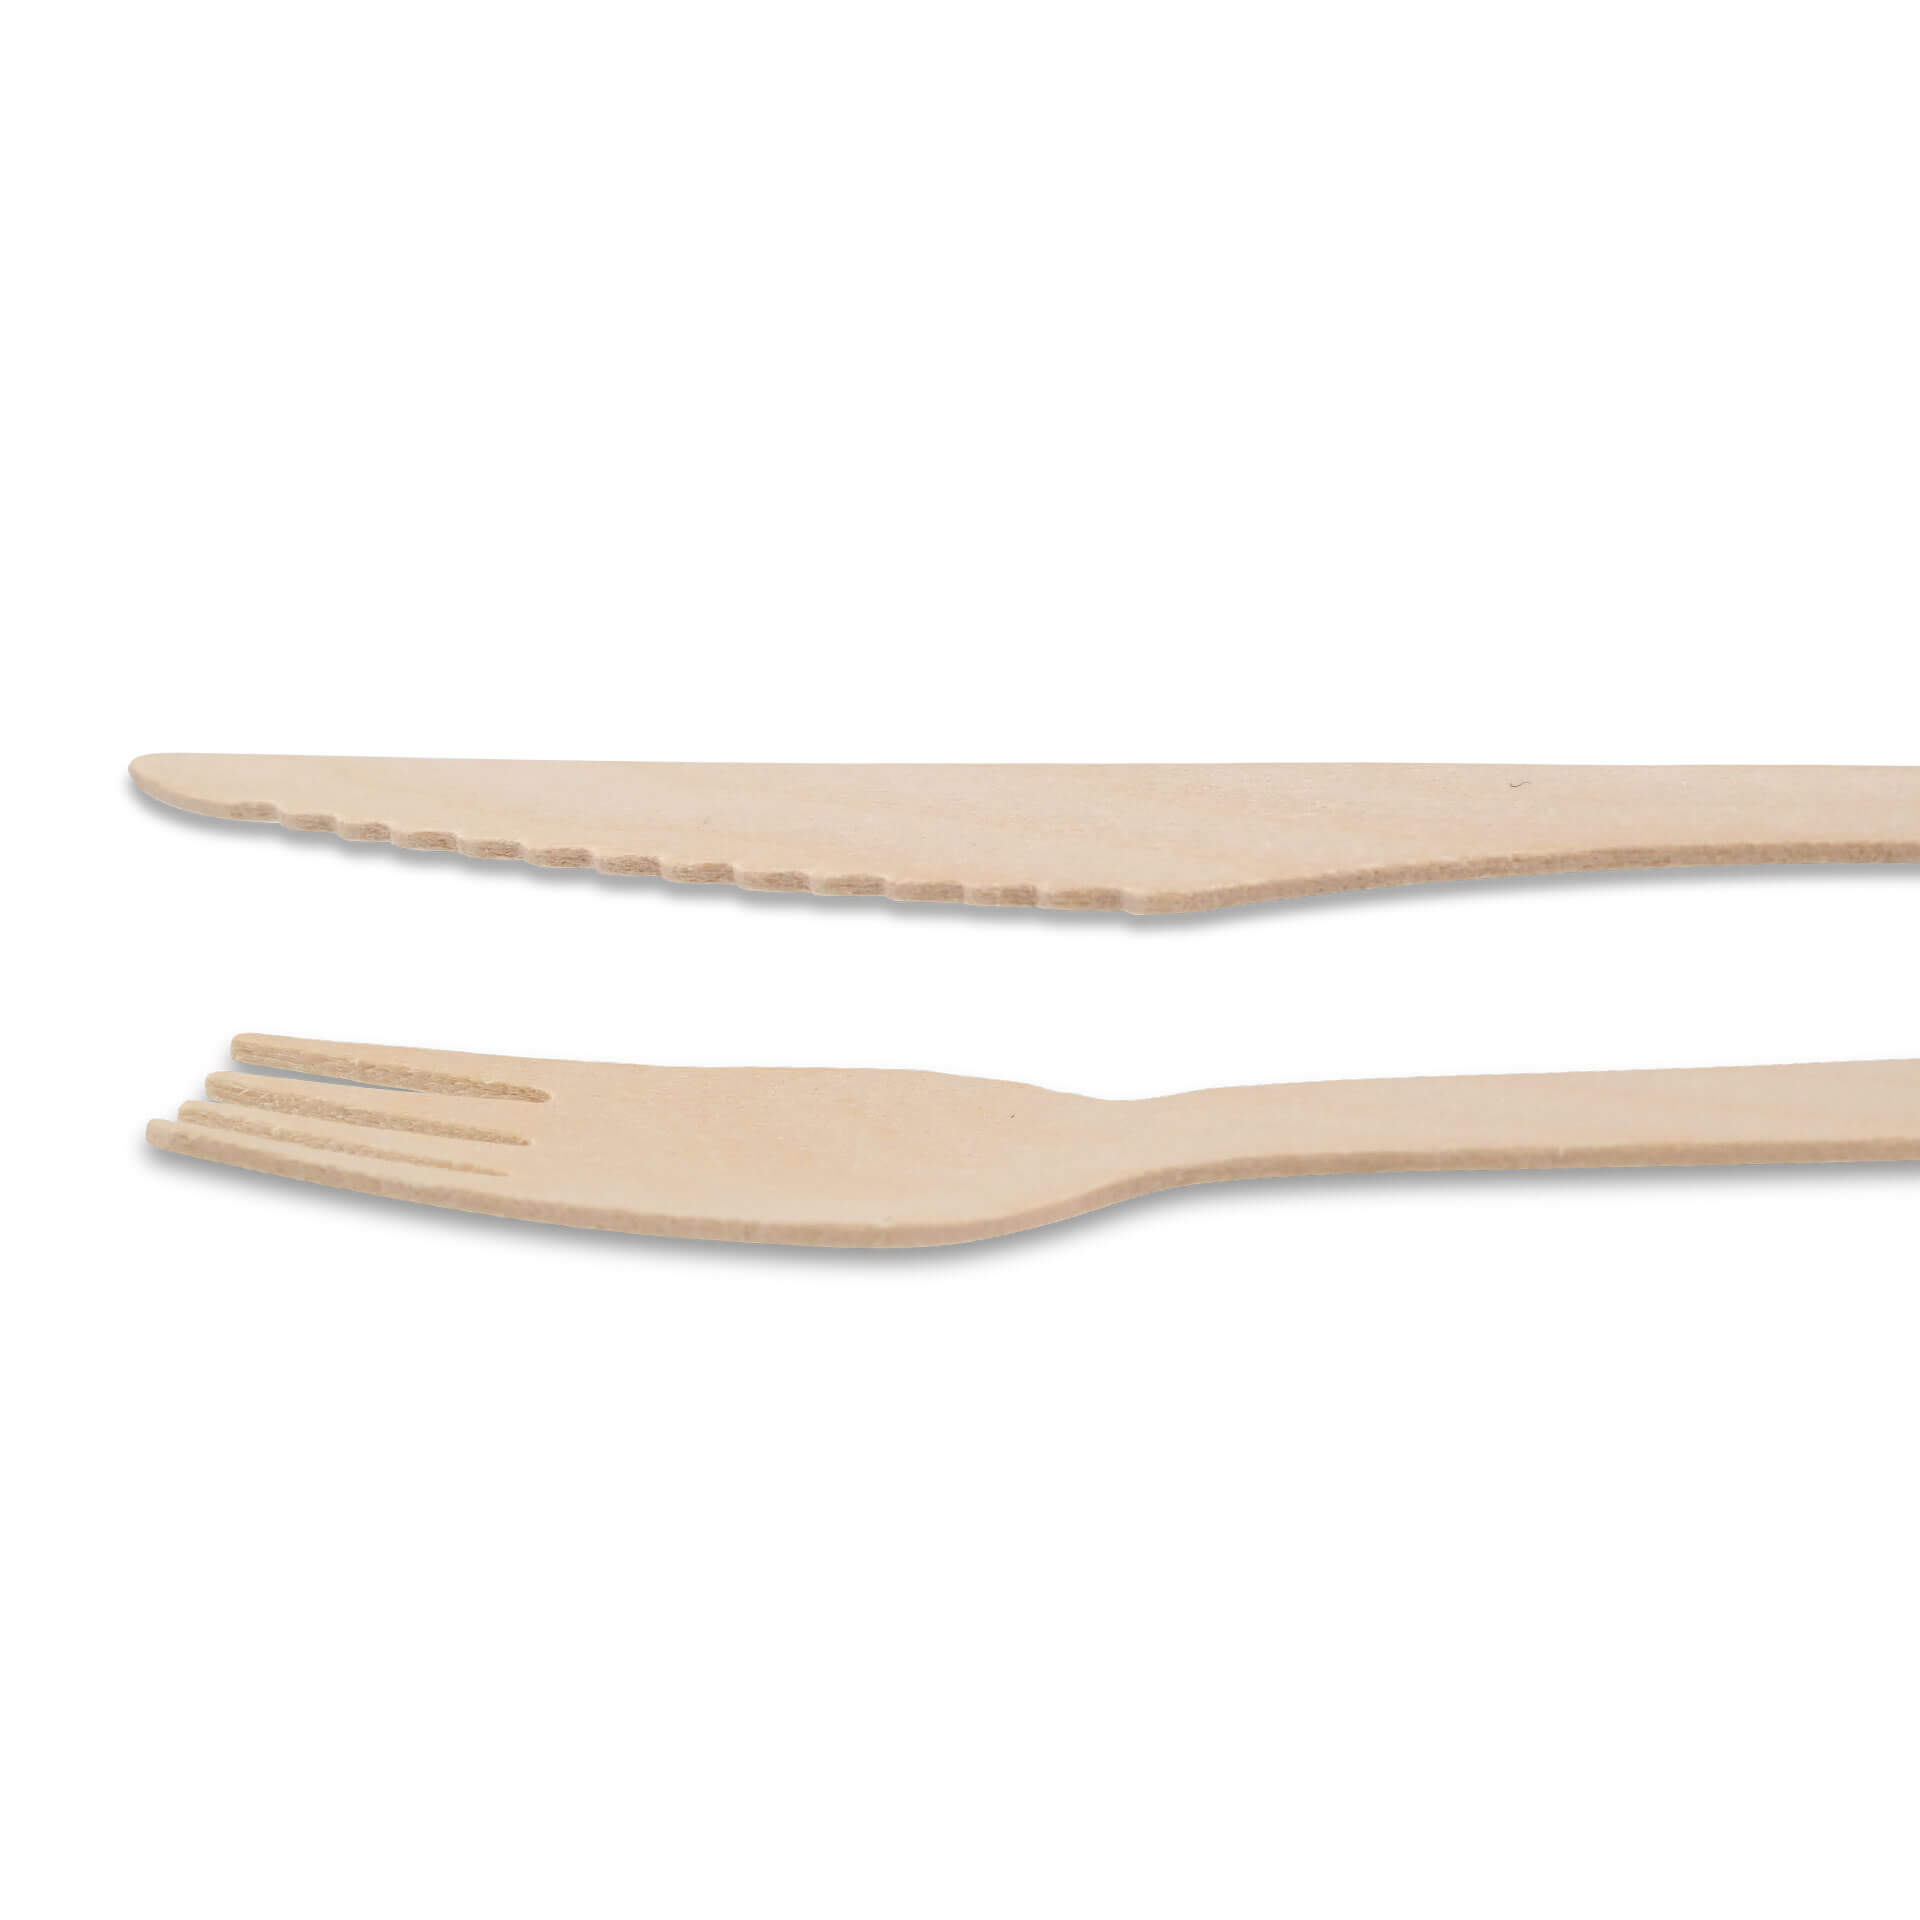 Holz-Besteck-Sets Messer, Gabel & Serviette, 16 cm, biobeschichtet